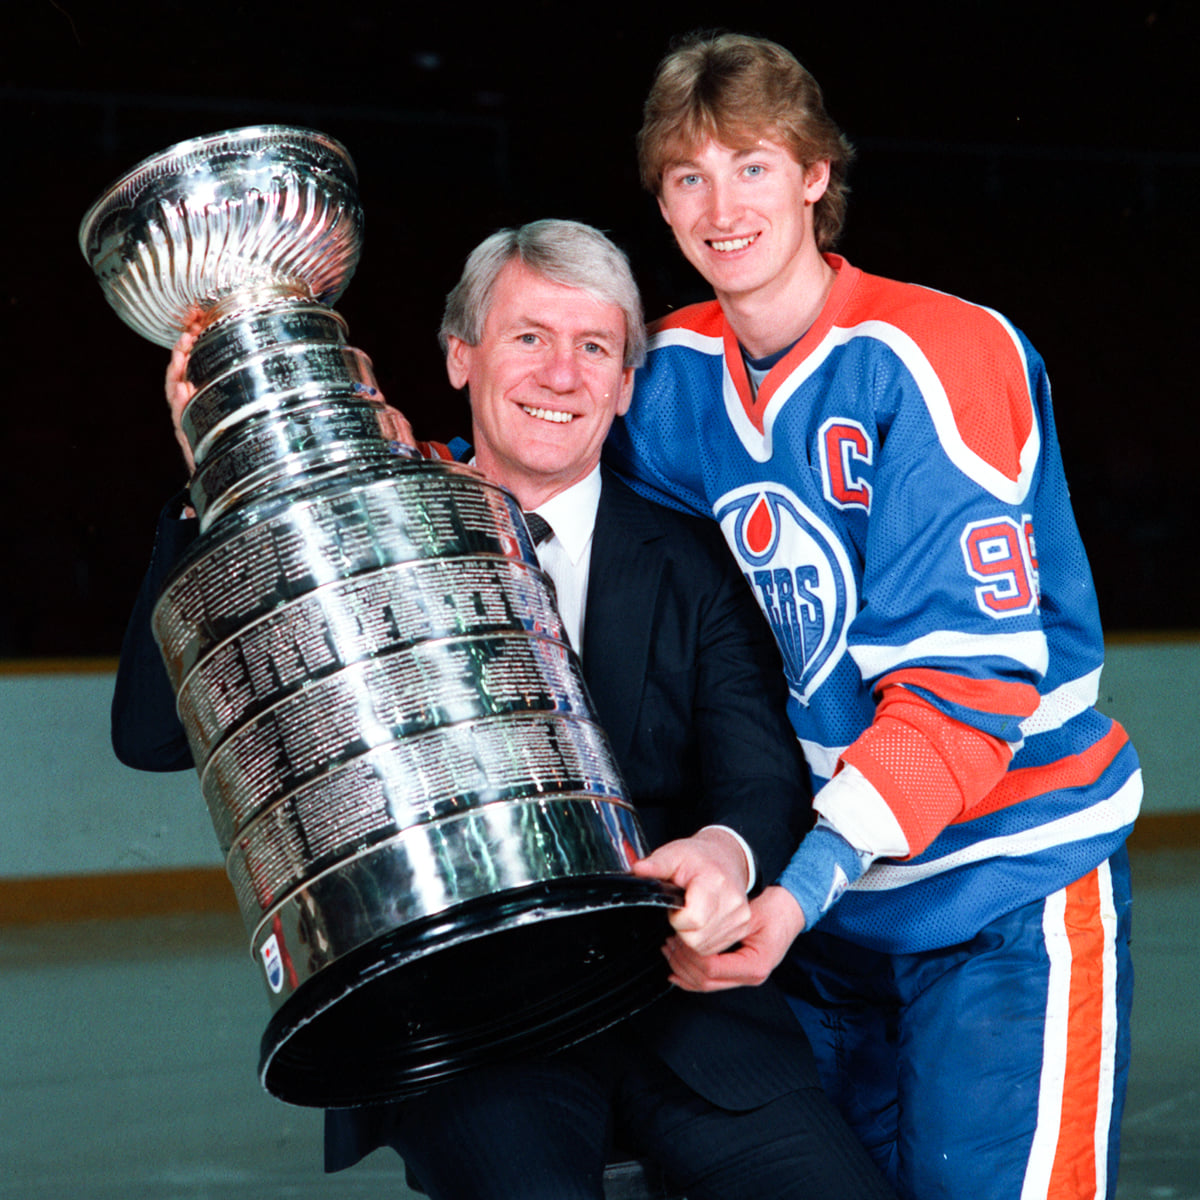 Midlanders have names etched on Stanley Cup alongside Gretzky